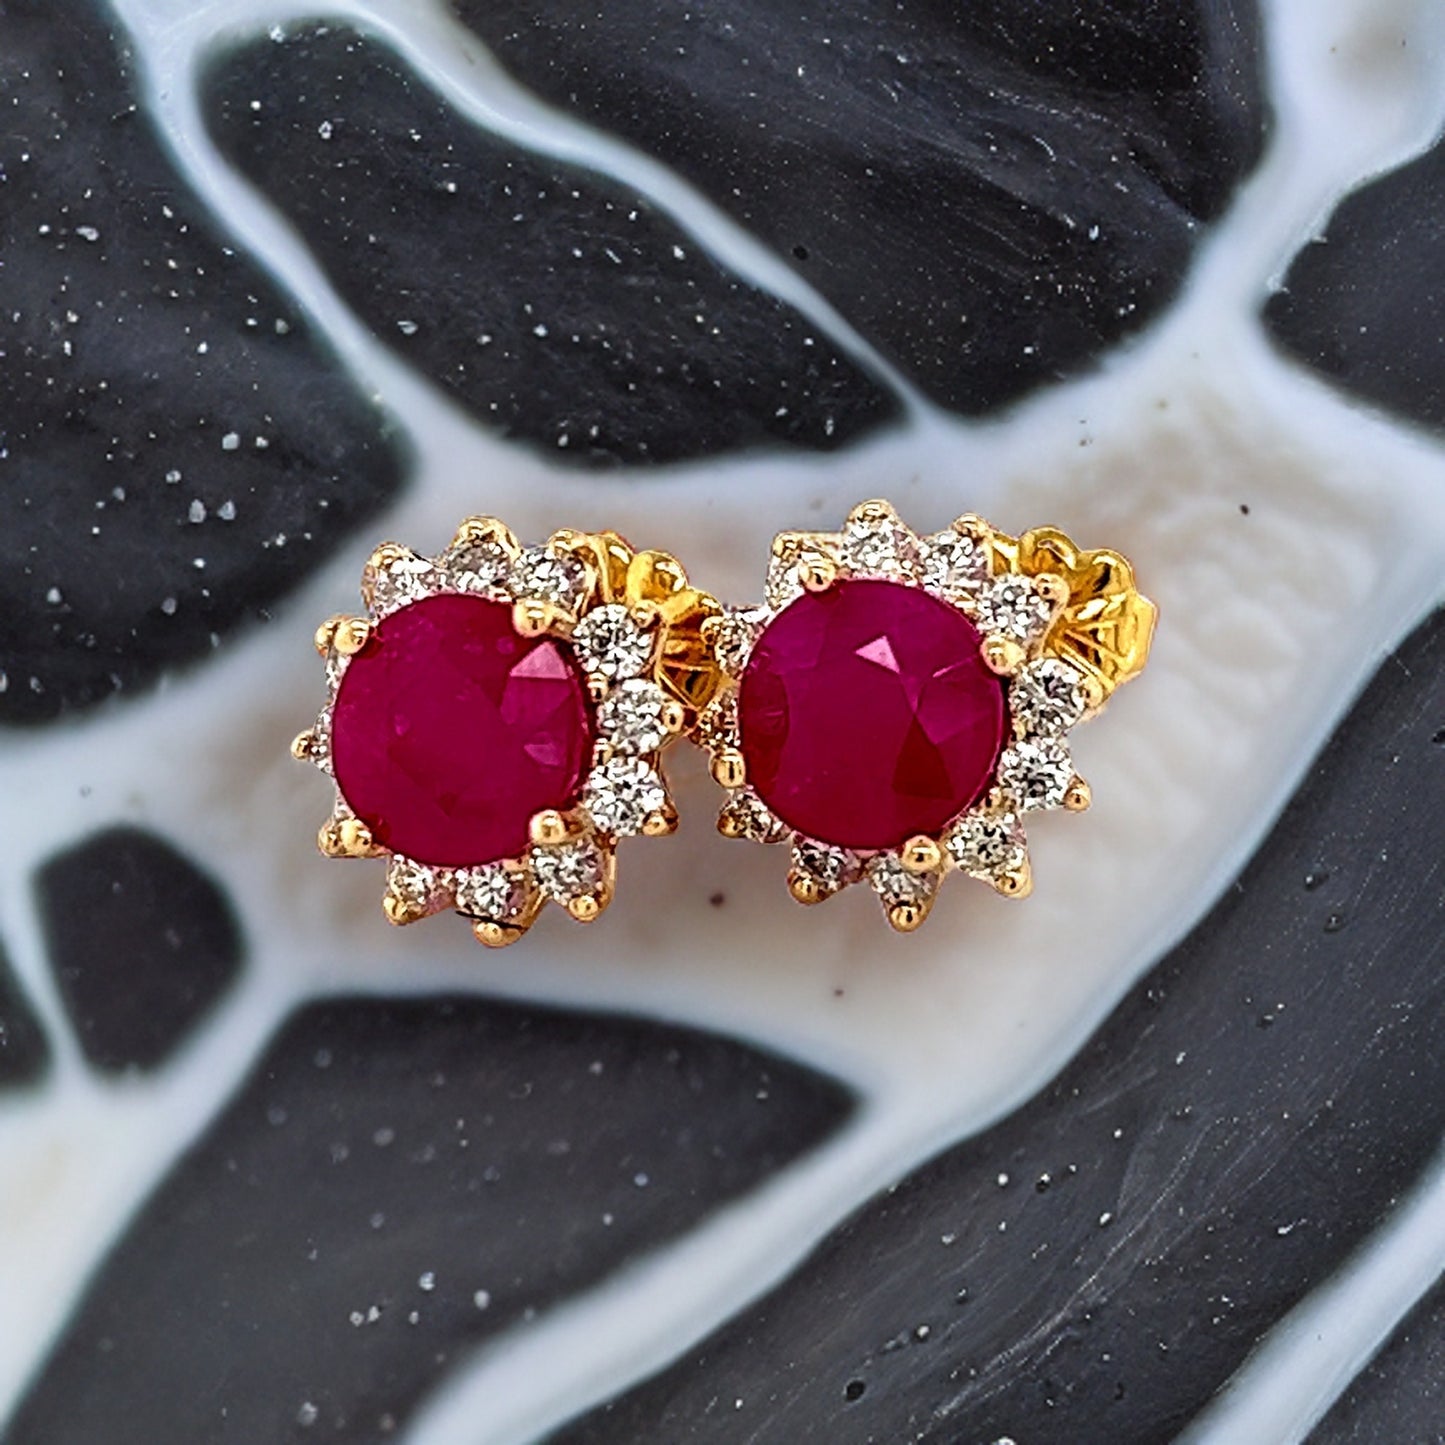 Natural Ruby Diamond Earrings 14k Gold 3.72 TCW Certified $5,950 211346